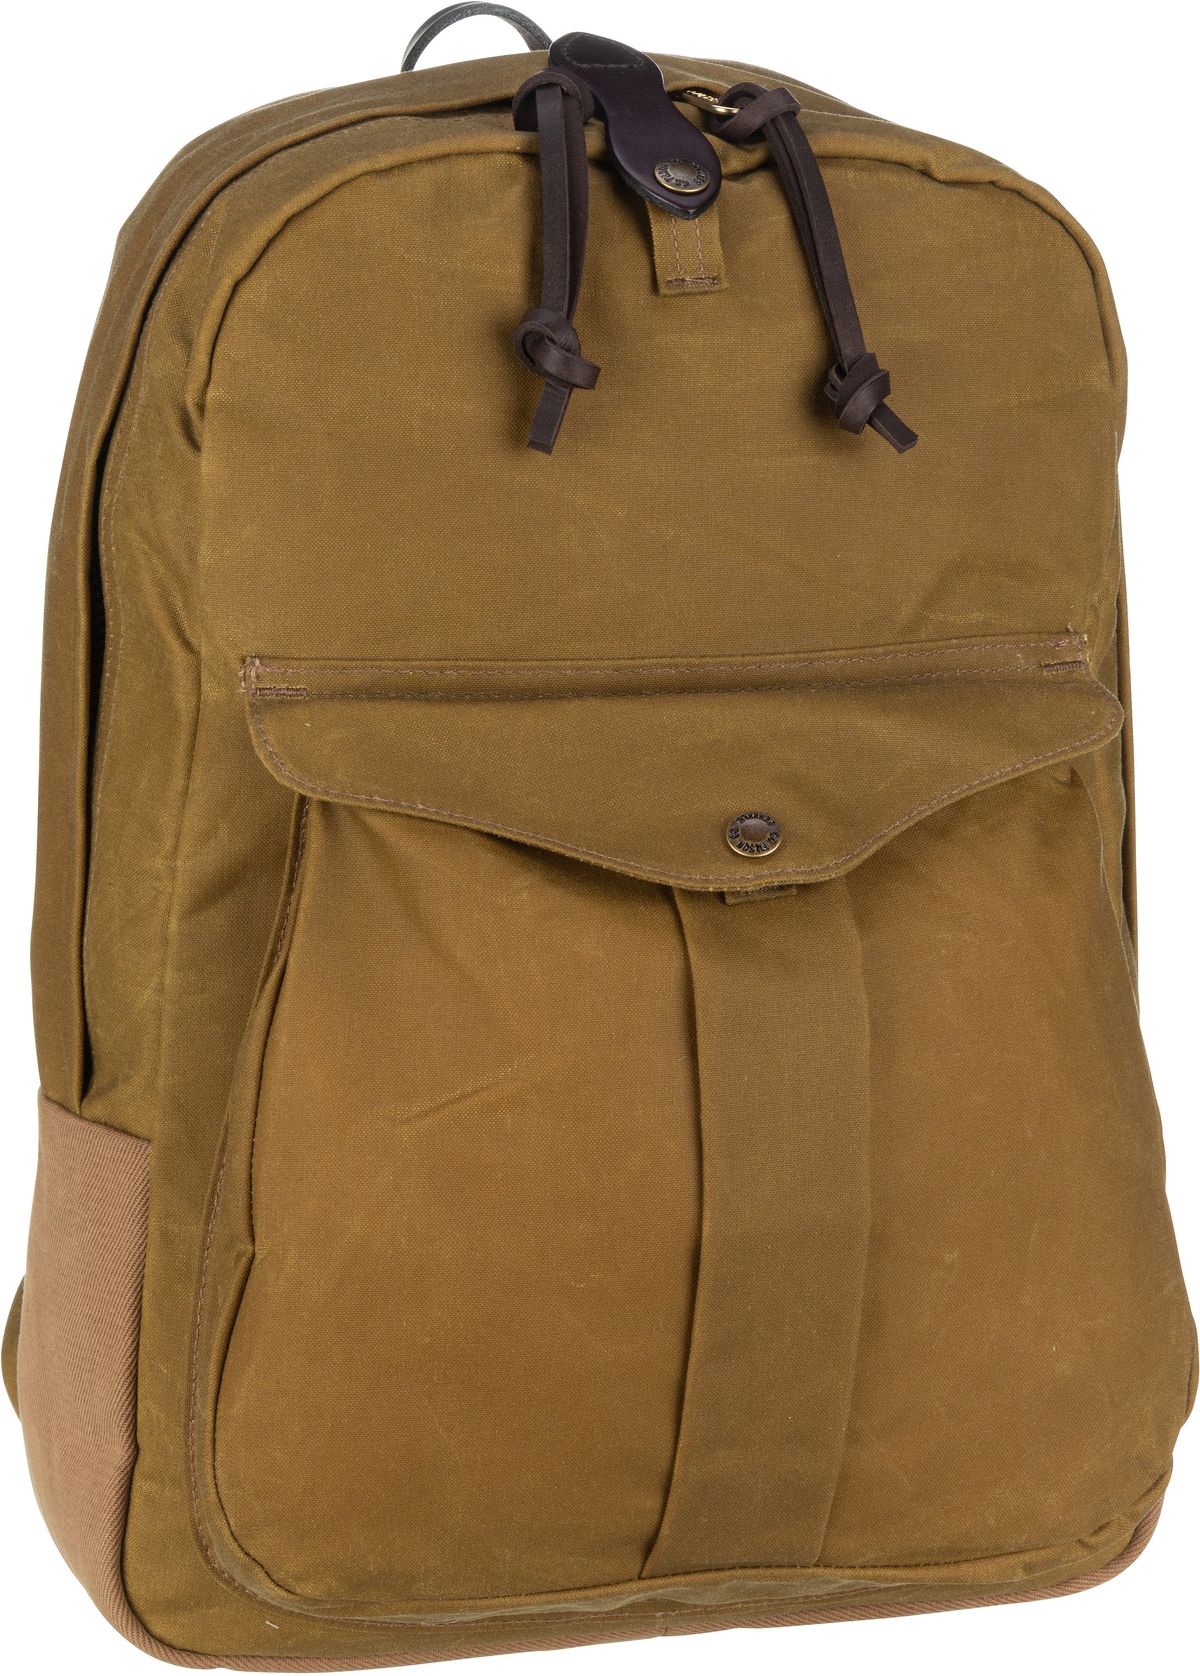 Filson Journeyman Backpack - Tan